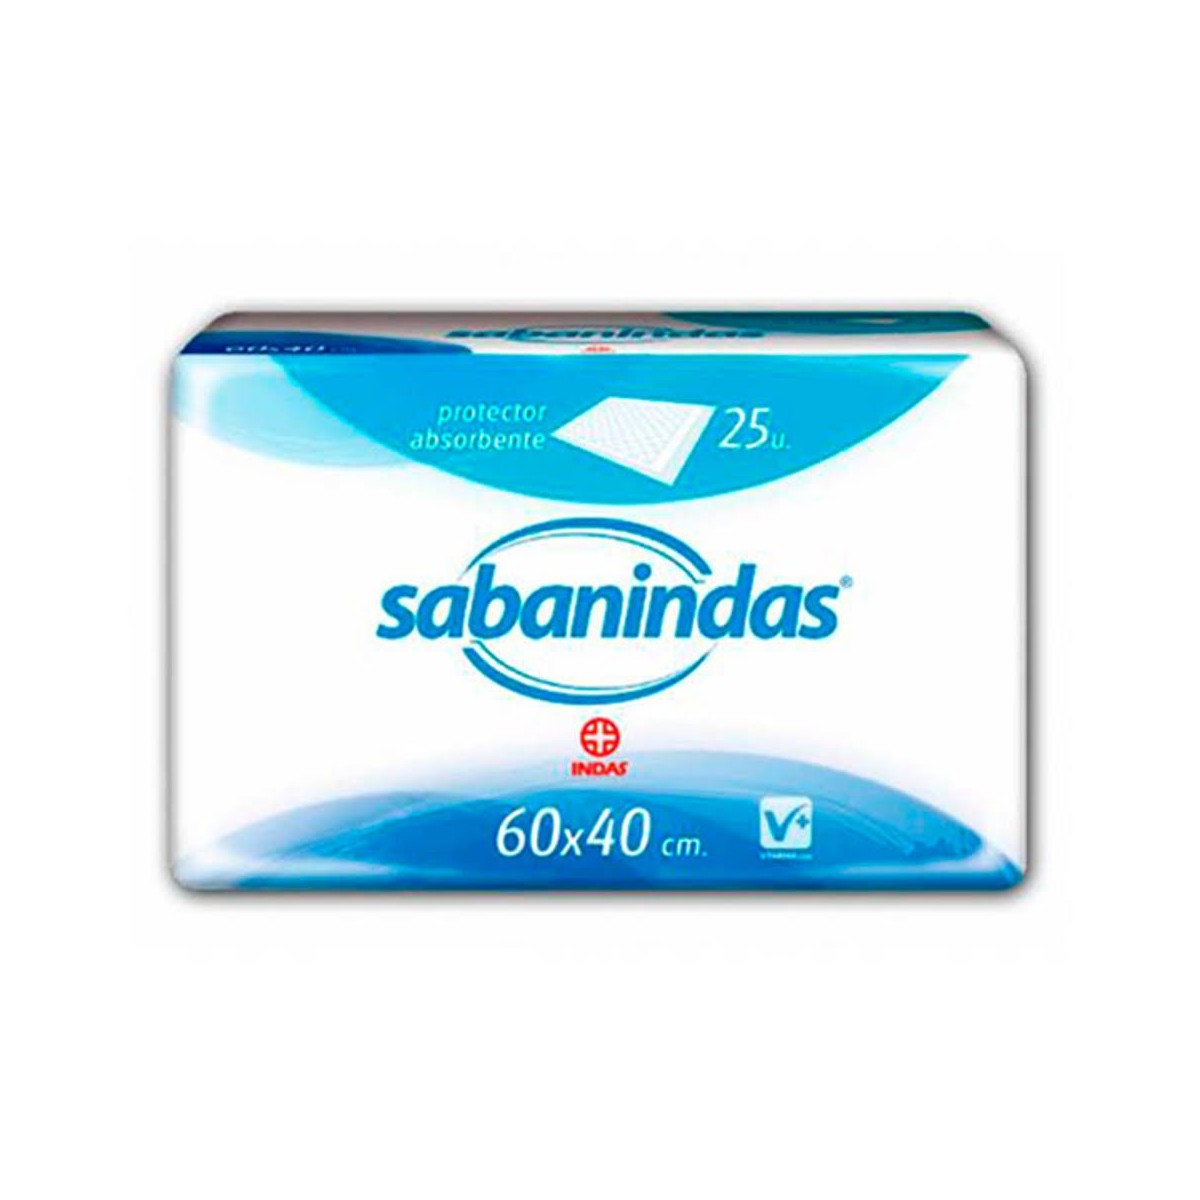 sabanindas-extra-60x40-25-und